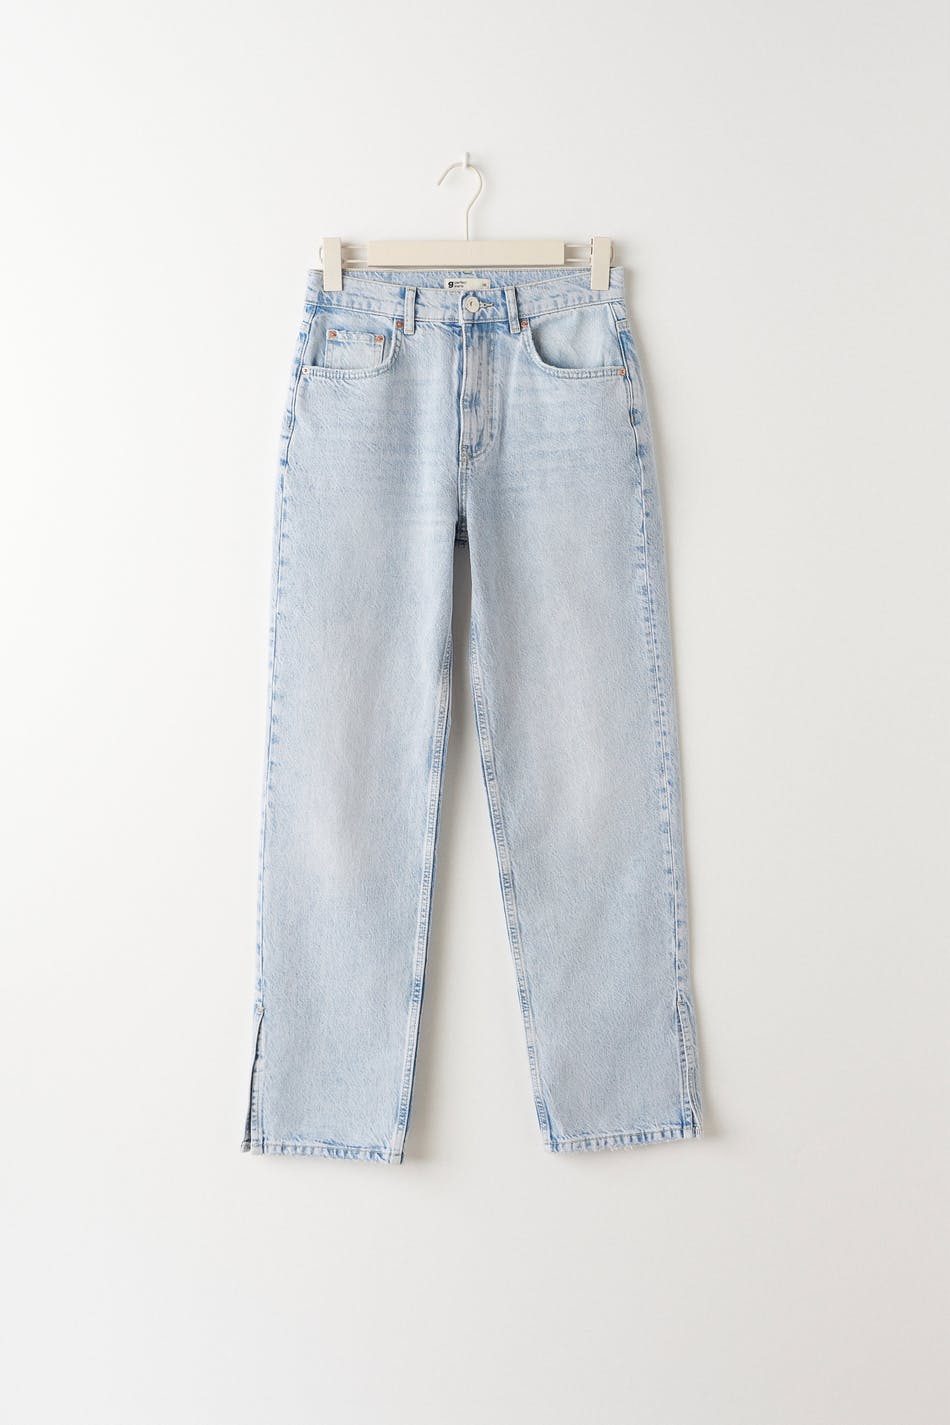 90s petite slit jeans